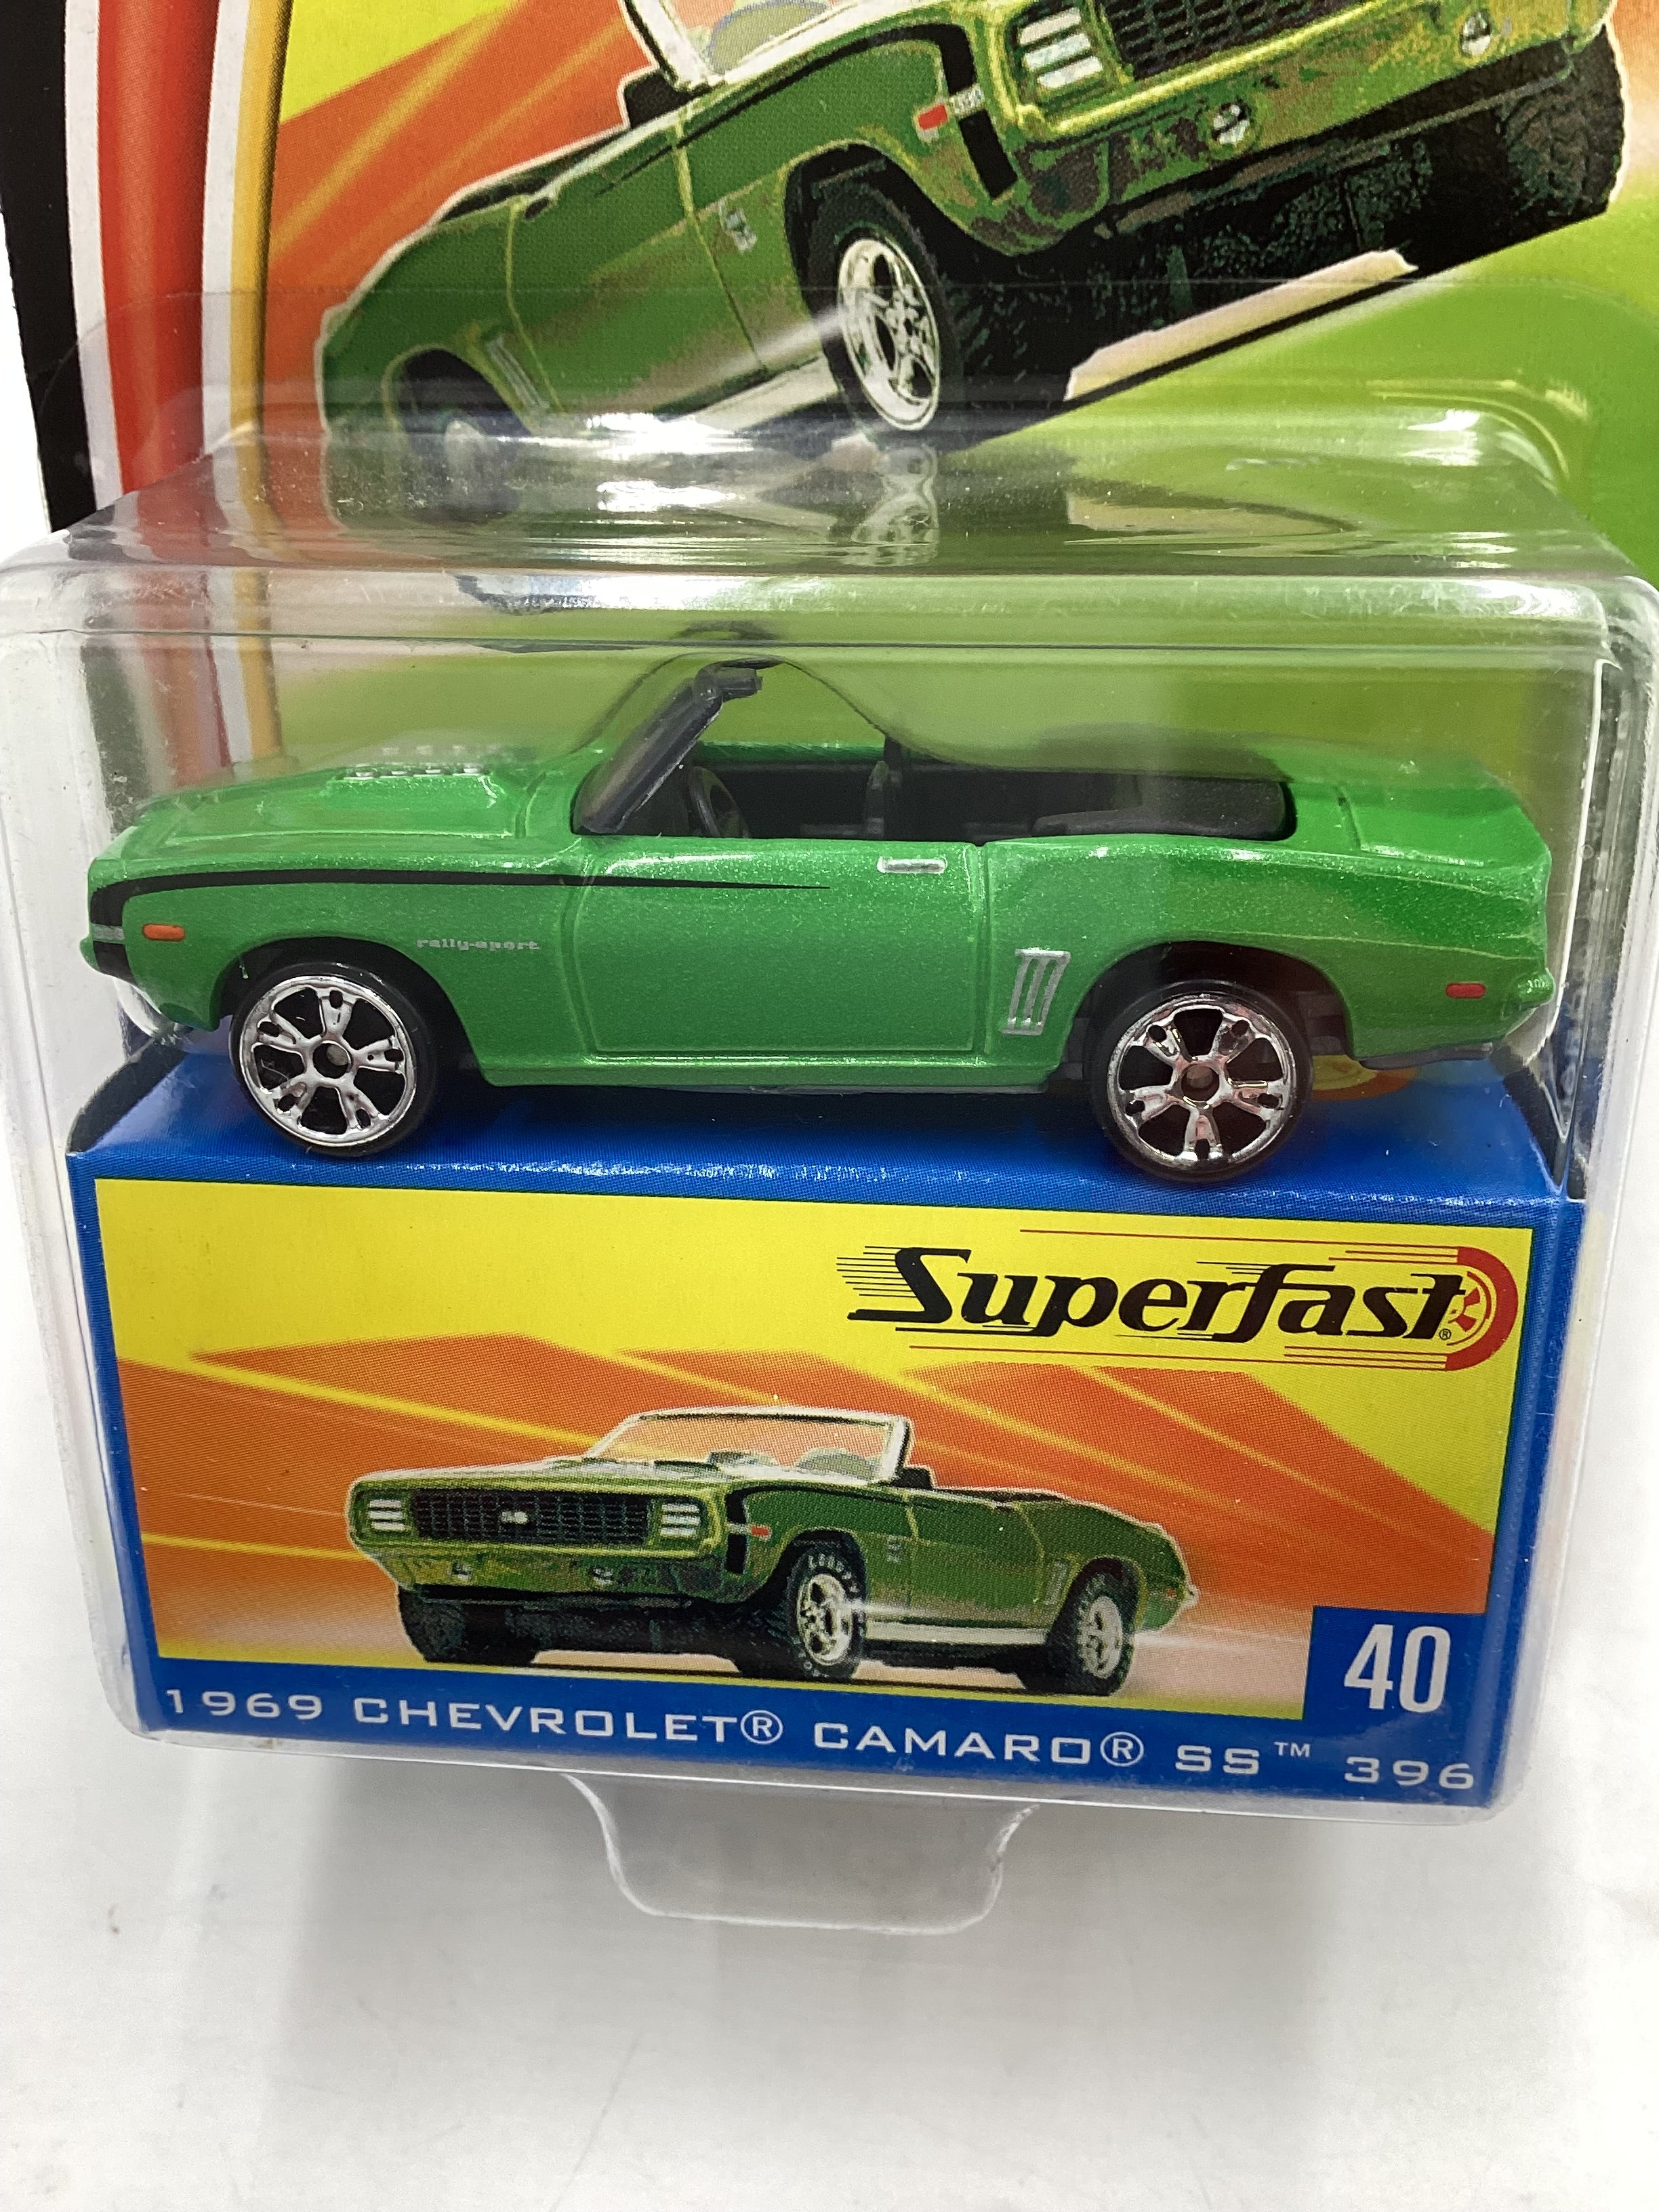 Matchbox 2004 Superfast #40 1969 Chevrolet Camaro SS 396 green - 自動車